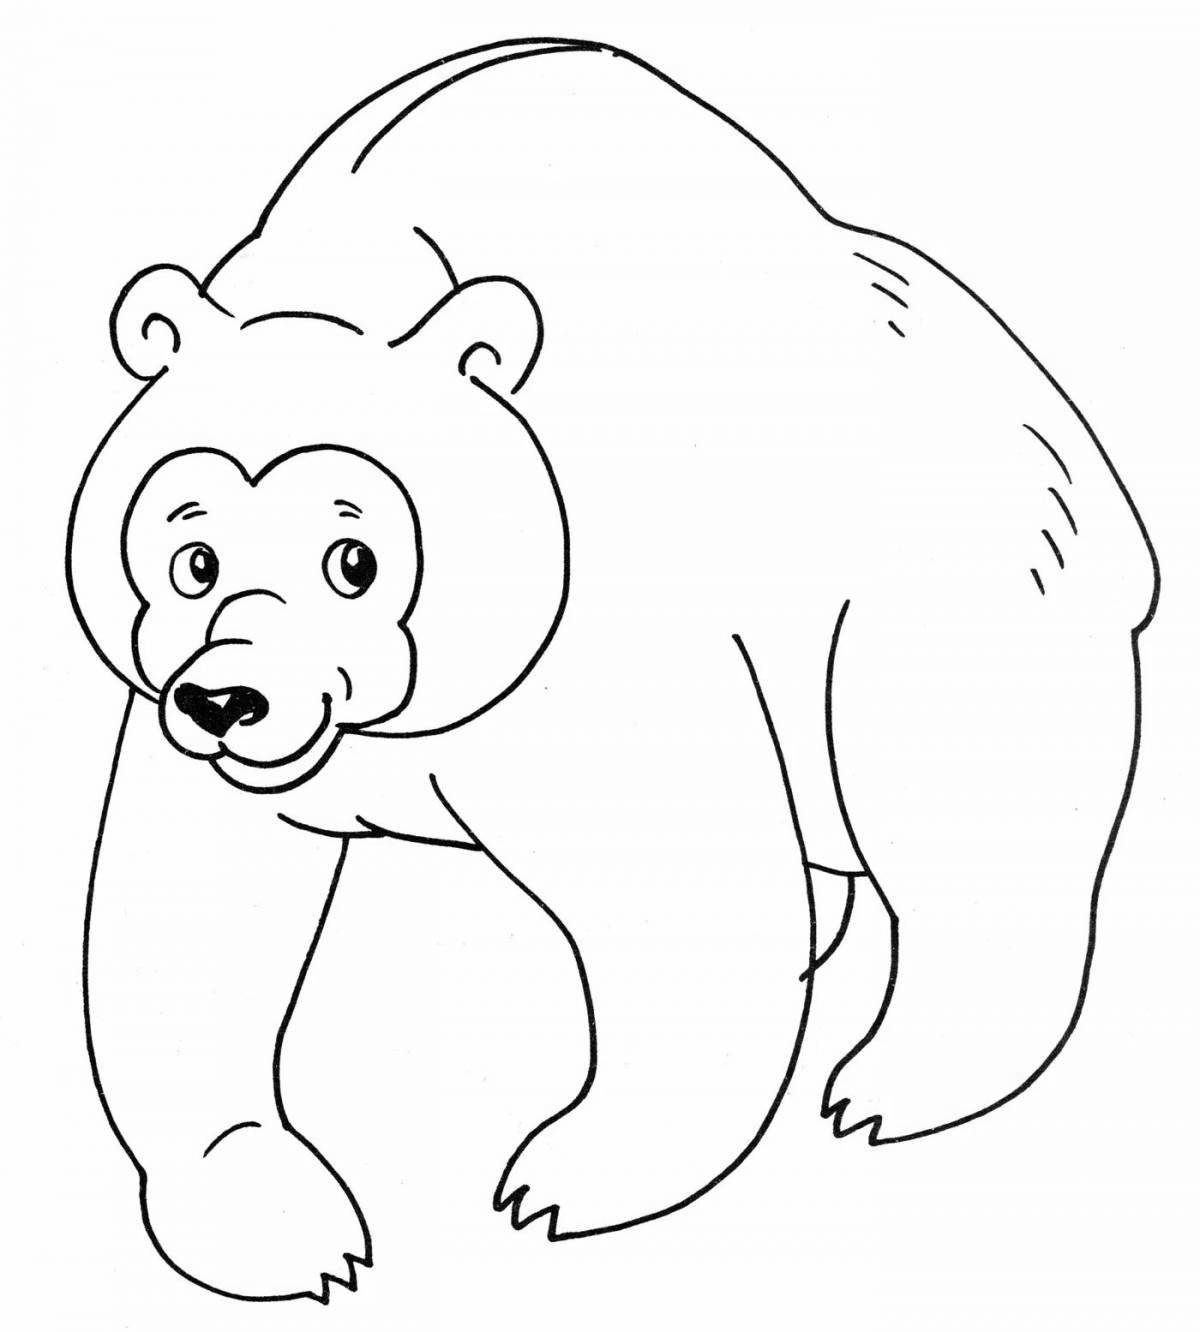 Playful bear drawing